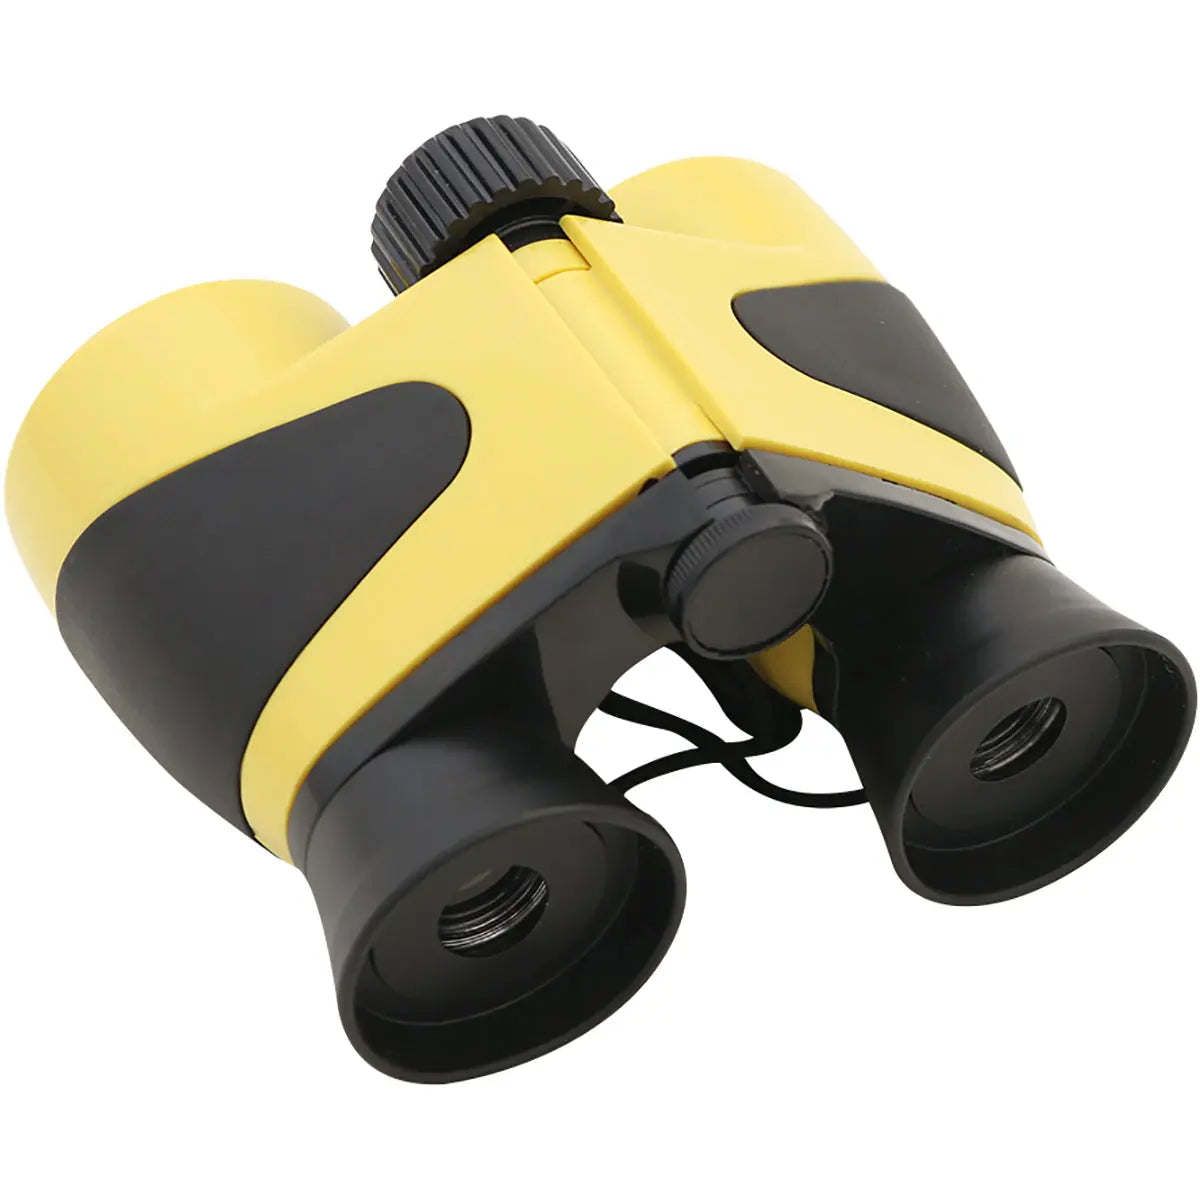 Coghlan's Kid's Binoculars - Yellow Coghlan's